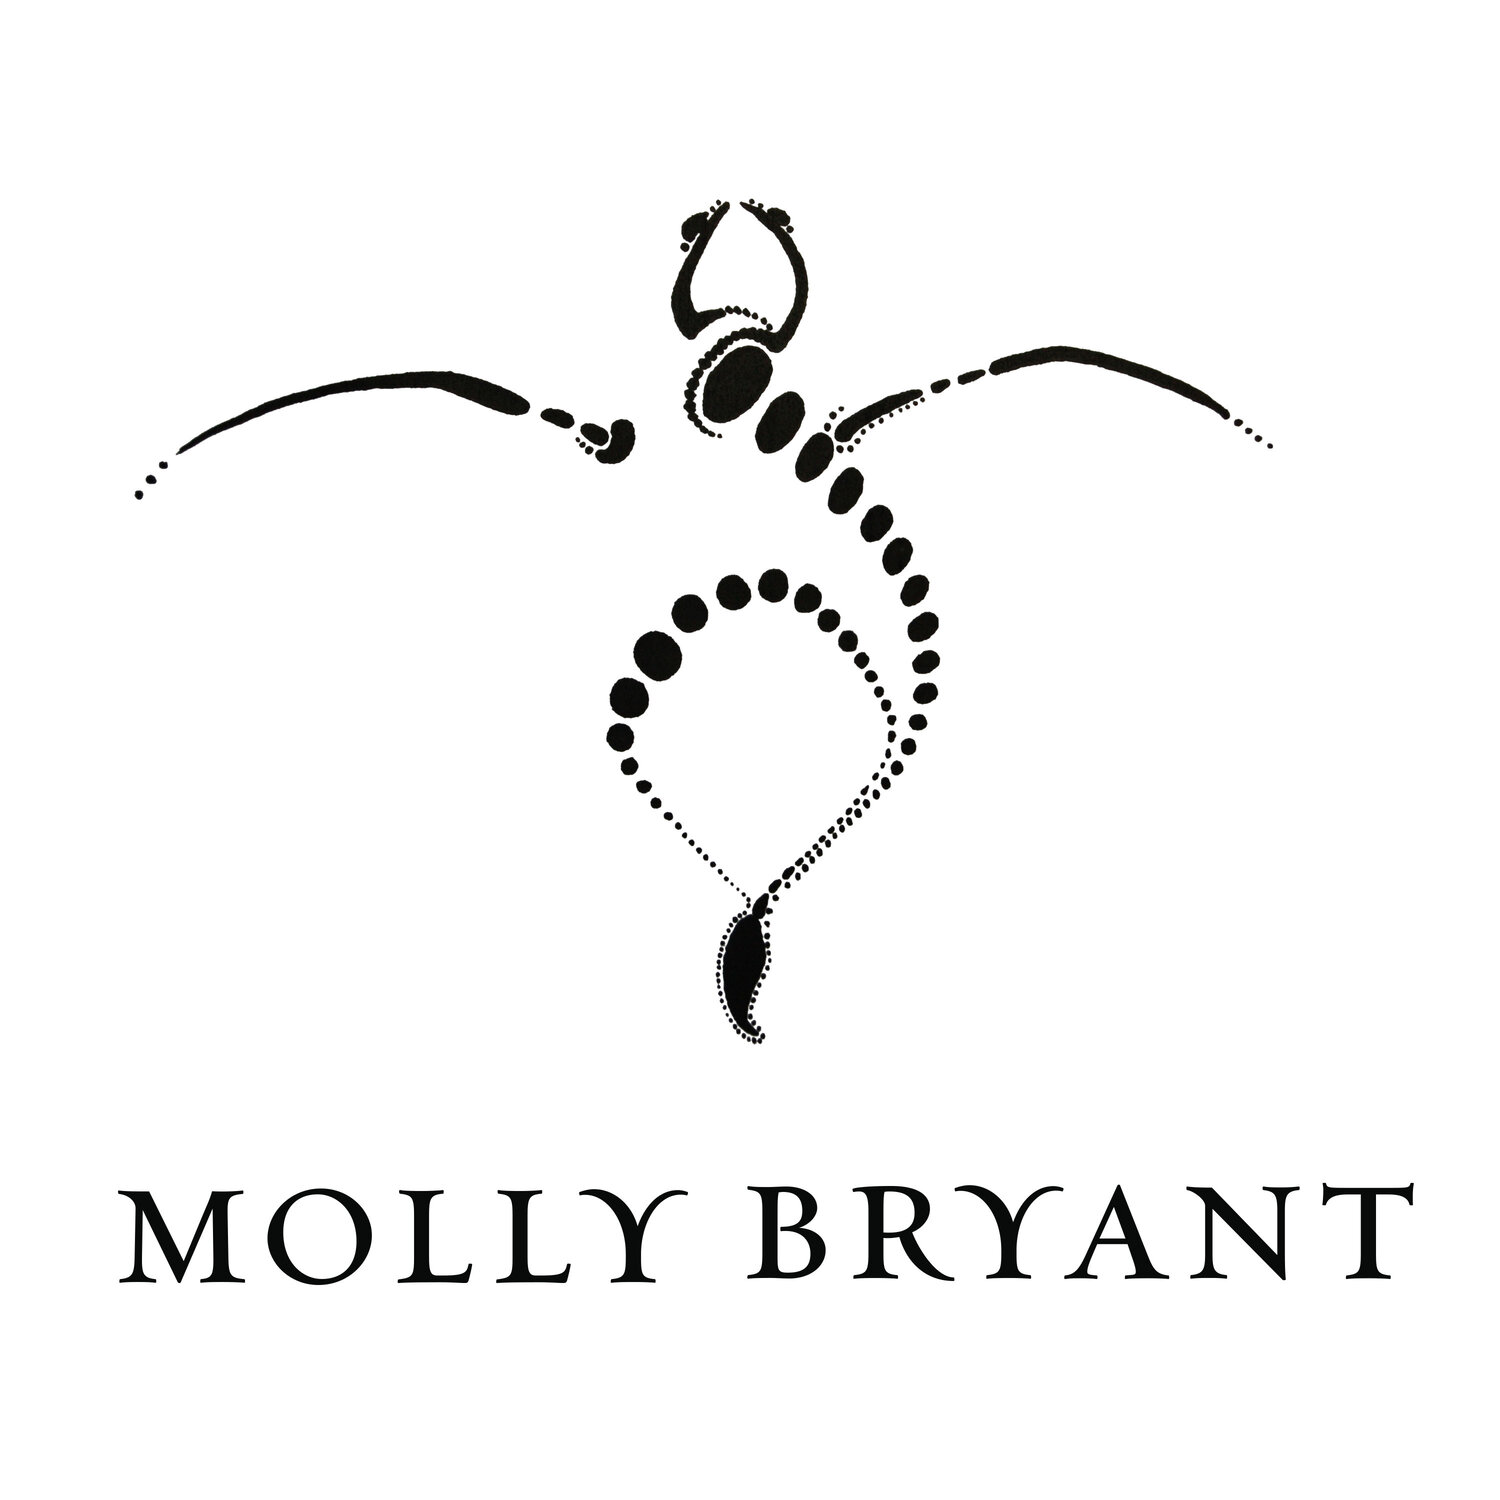 MOLLY BRYANT